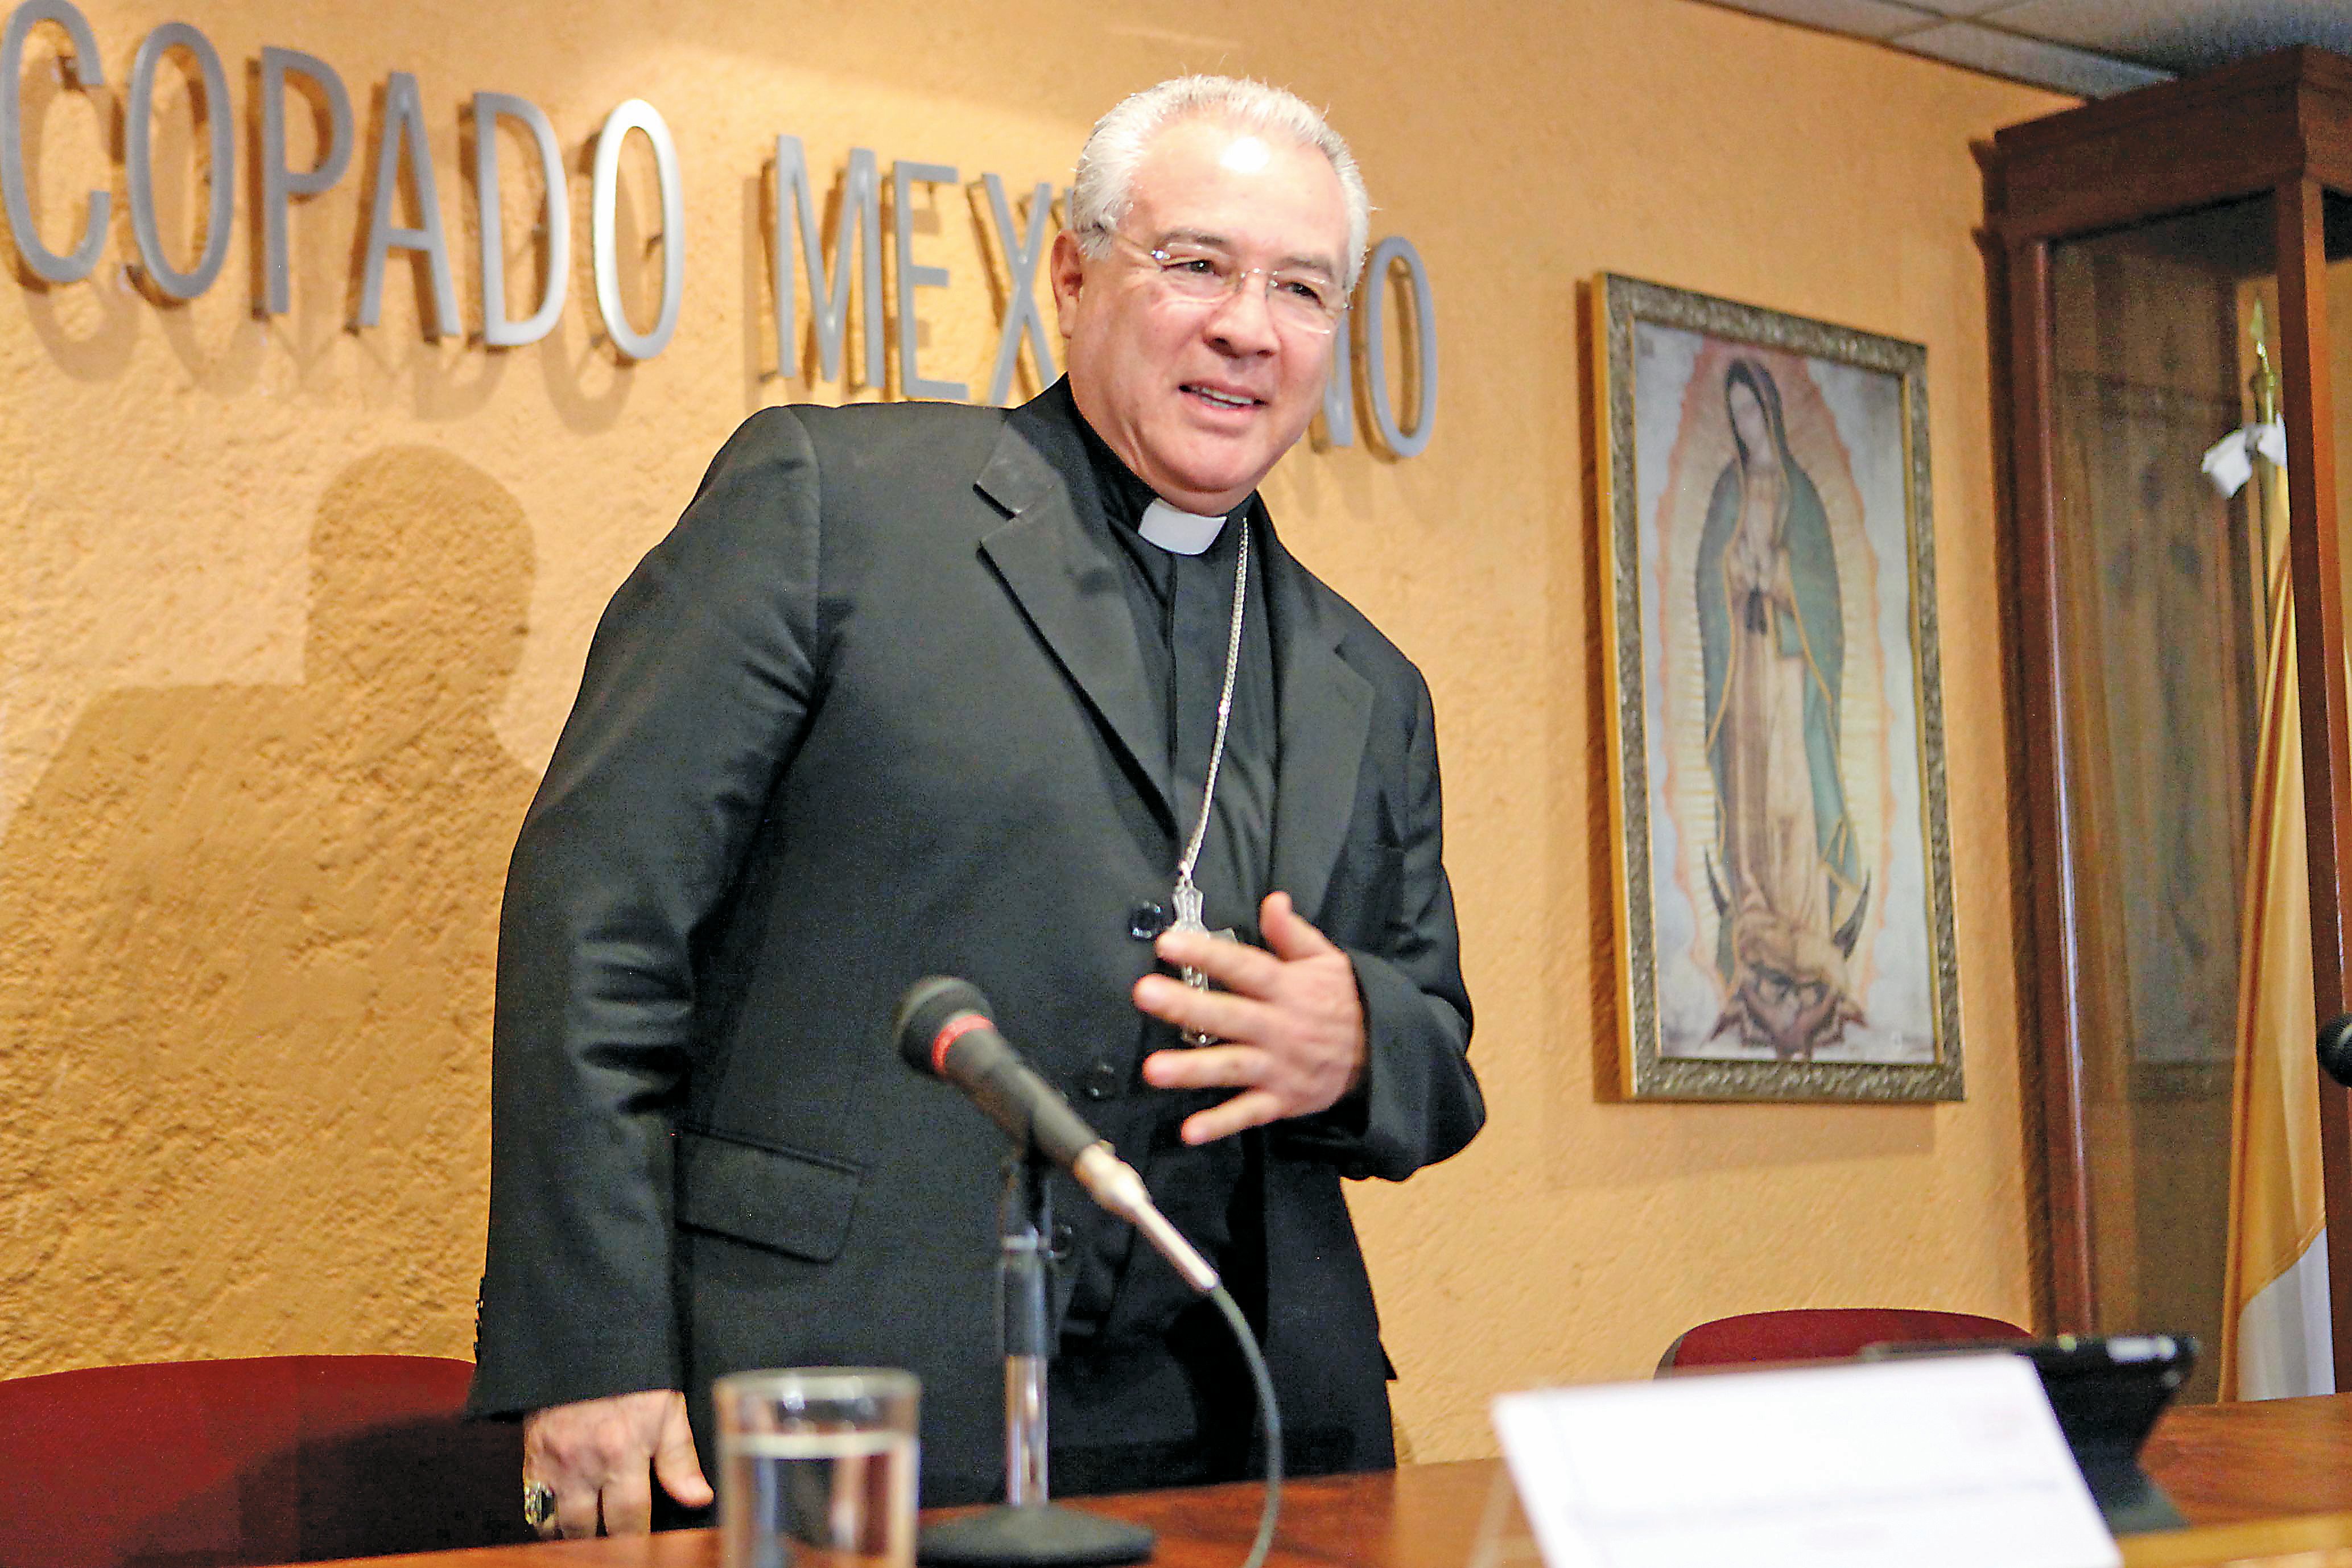 Francisco Robles Ortega